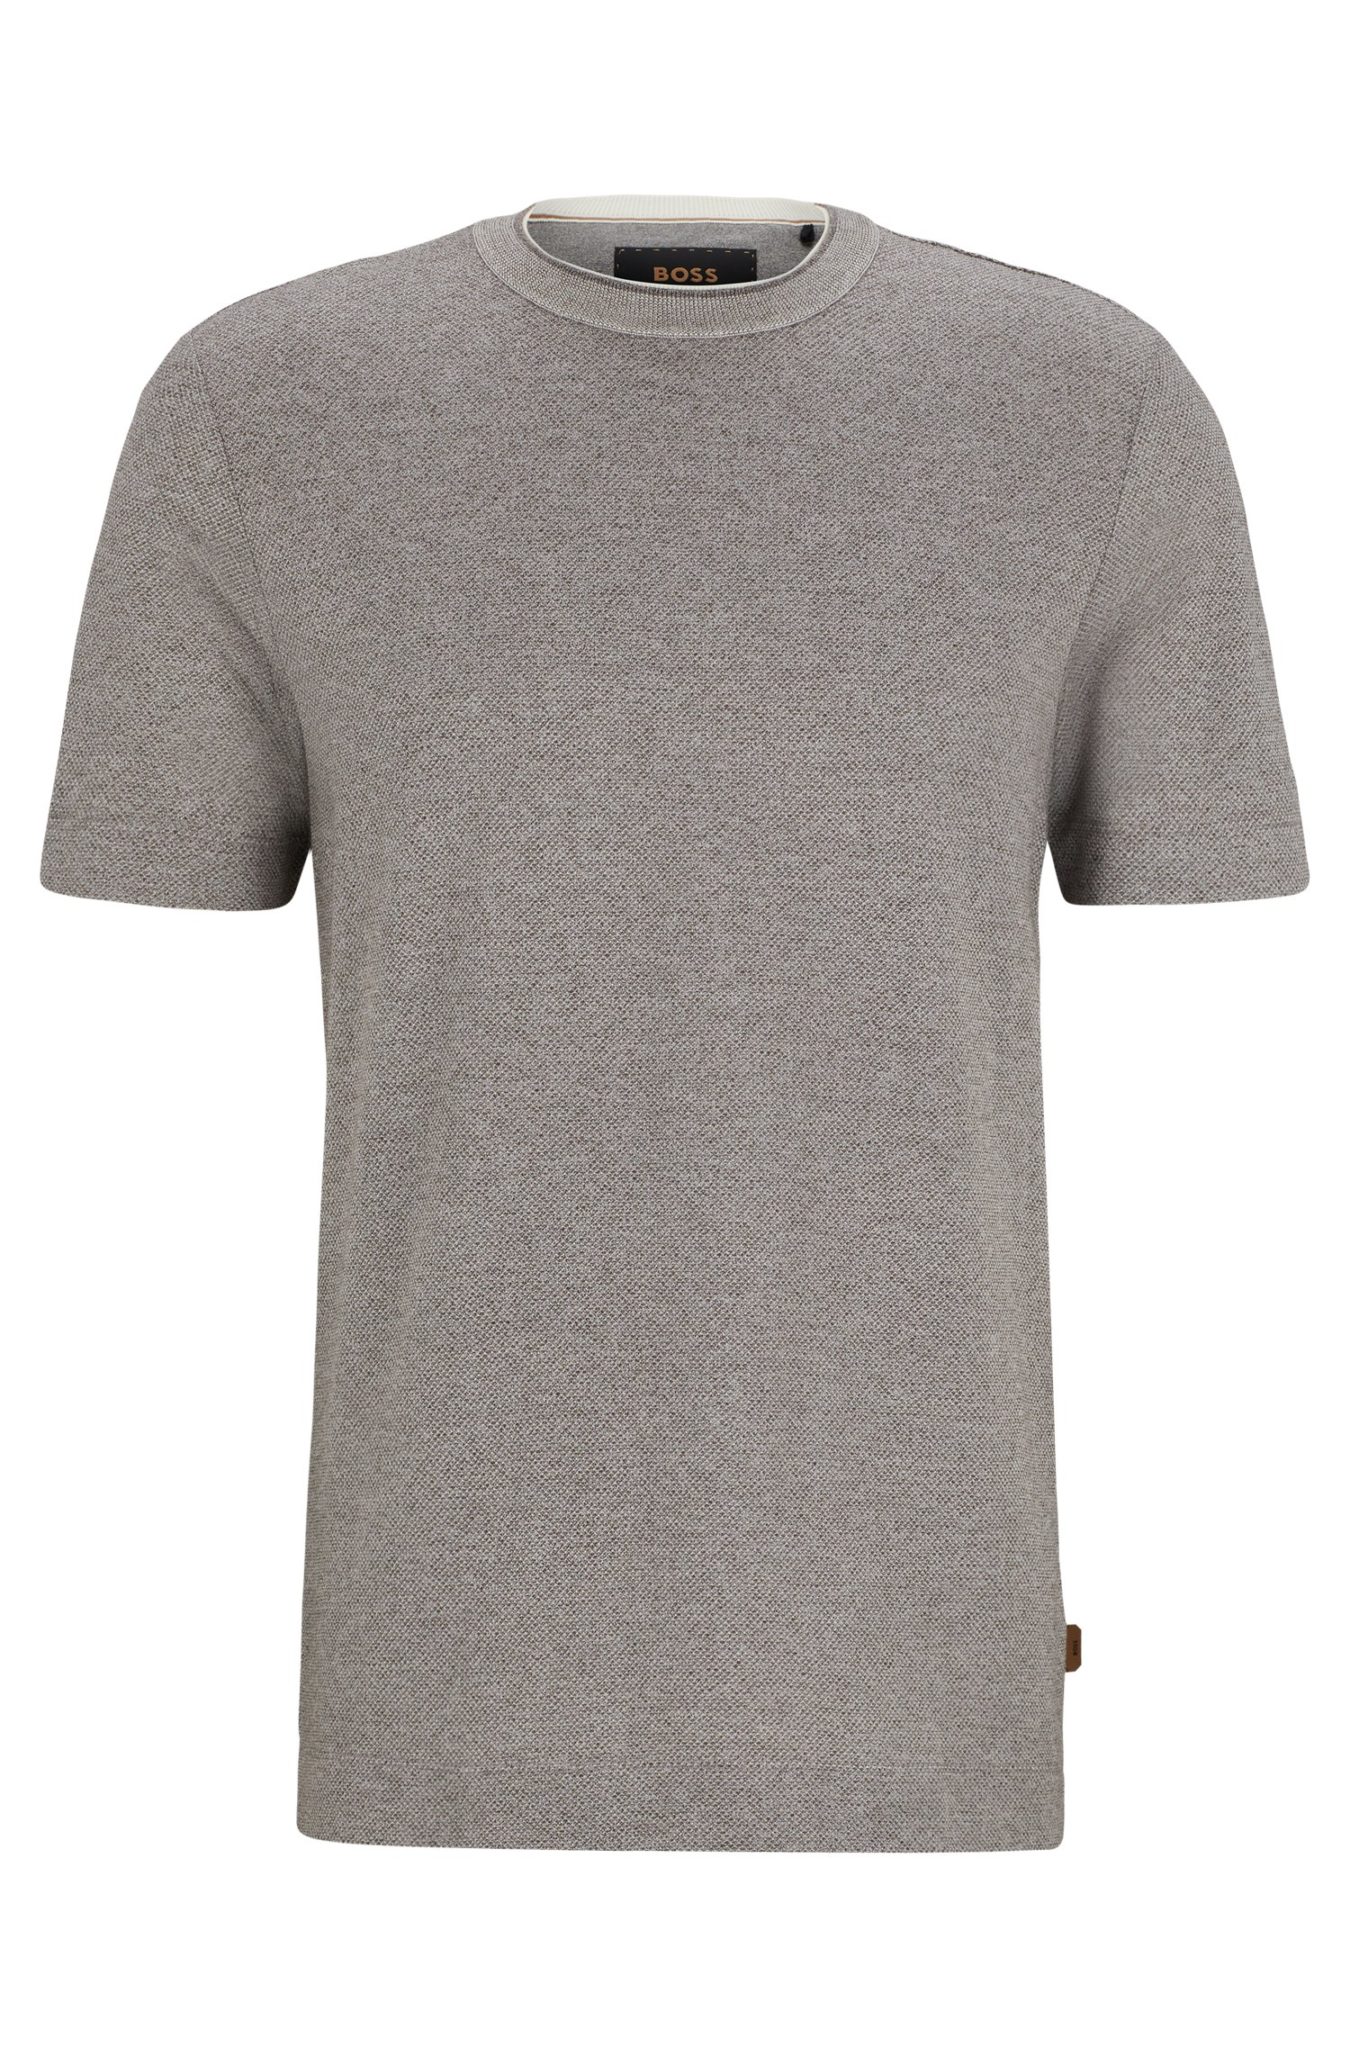 Hugo Boss T-shirt Regular en coton et soie